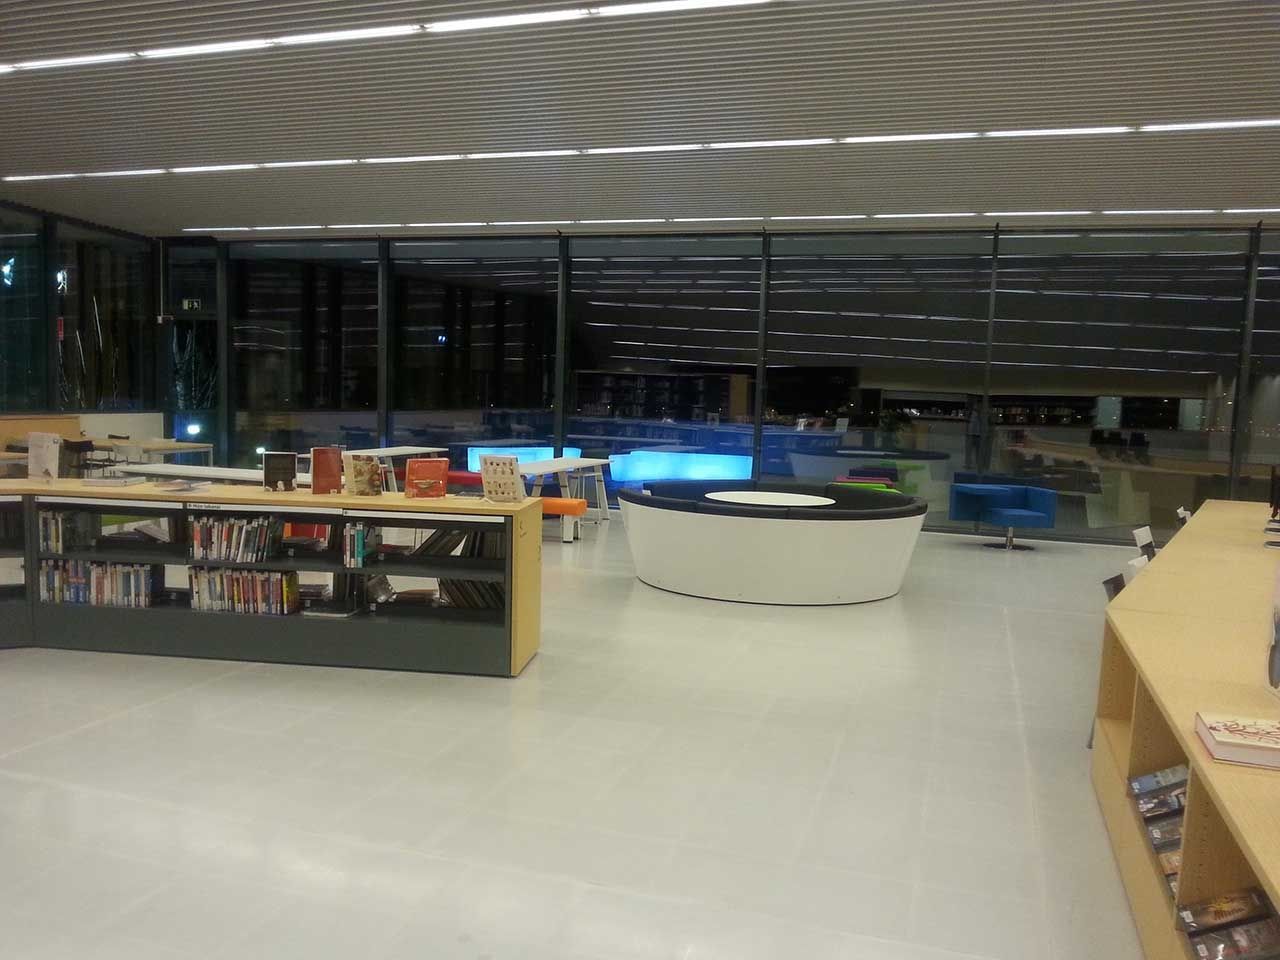 Biblioteca Pública de Martorell (Barcelona)